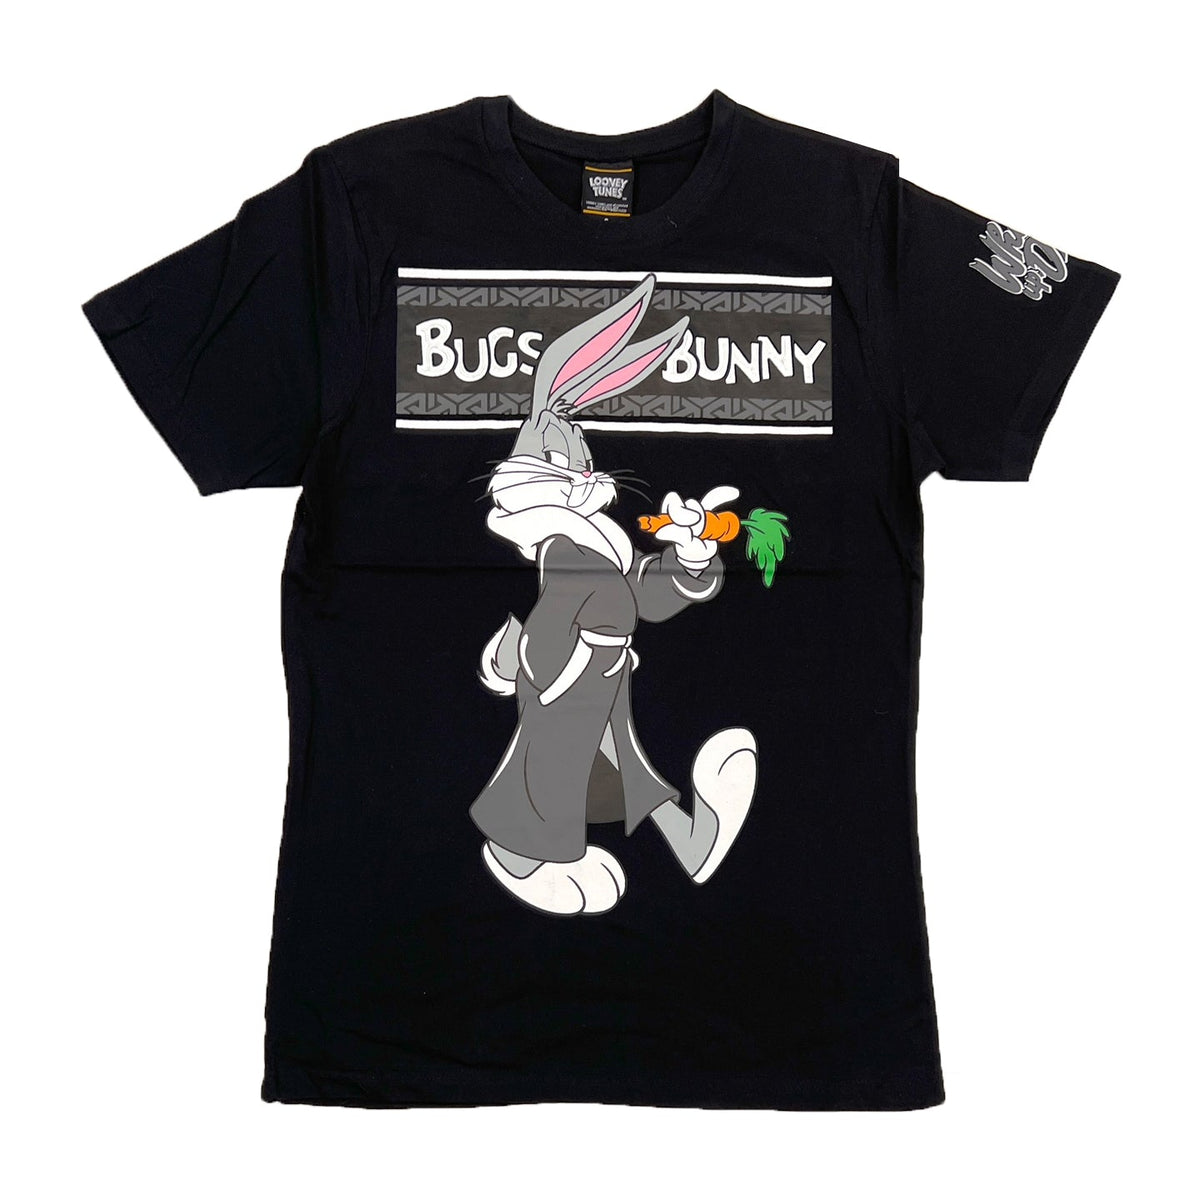 / Tee (Black) $30 Looney 2 $16.99 Tunes for Bunny Bugs